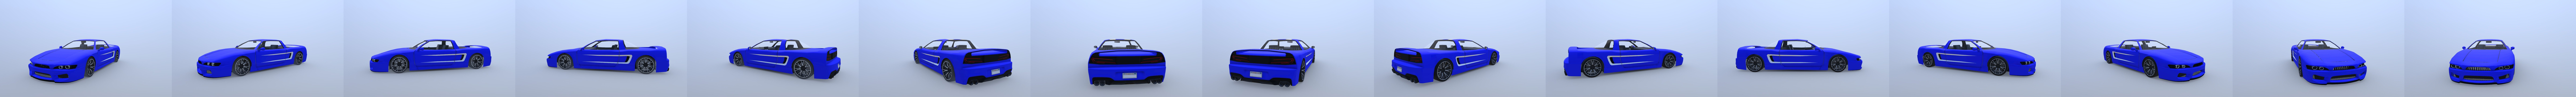 Infernus GTA San Andreas, 3D CAD Model Library